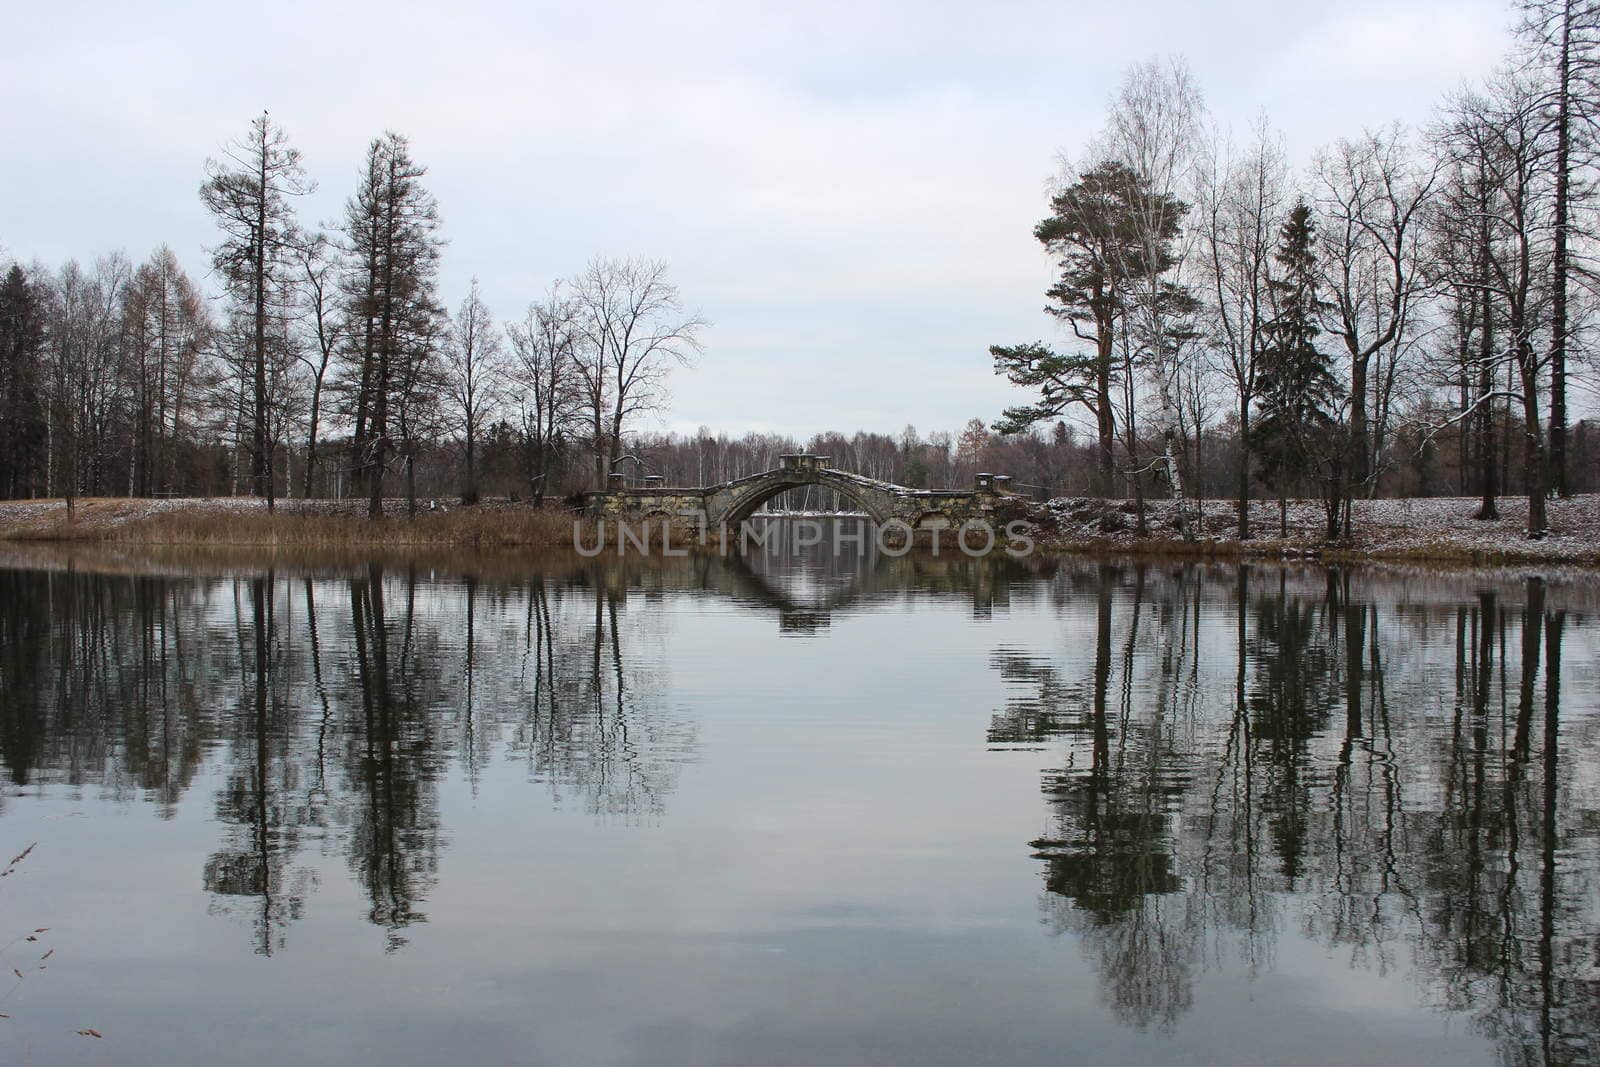 Humpback Bridge in Gatchina park, uniting the two islands in the White Lake. Leningrad, November 2015